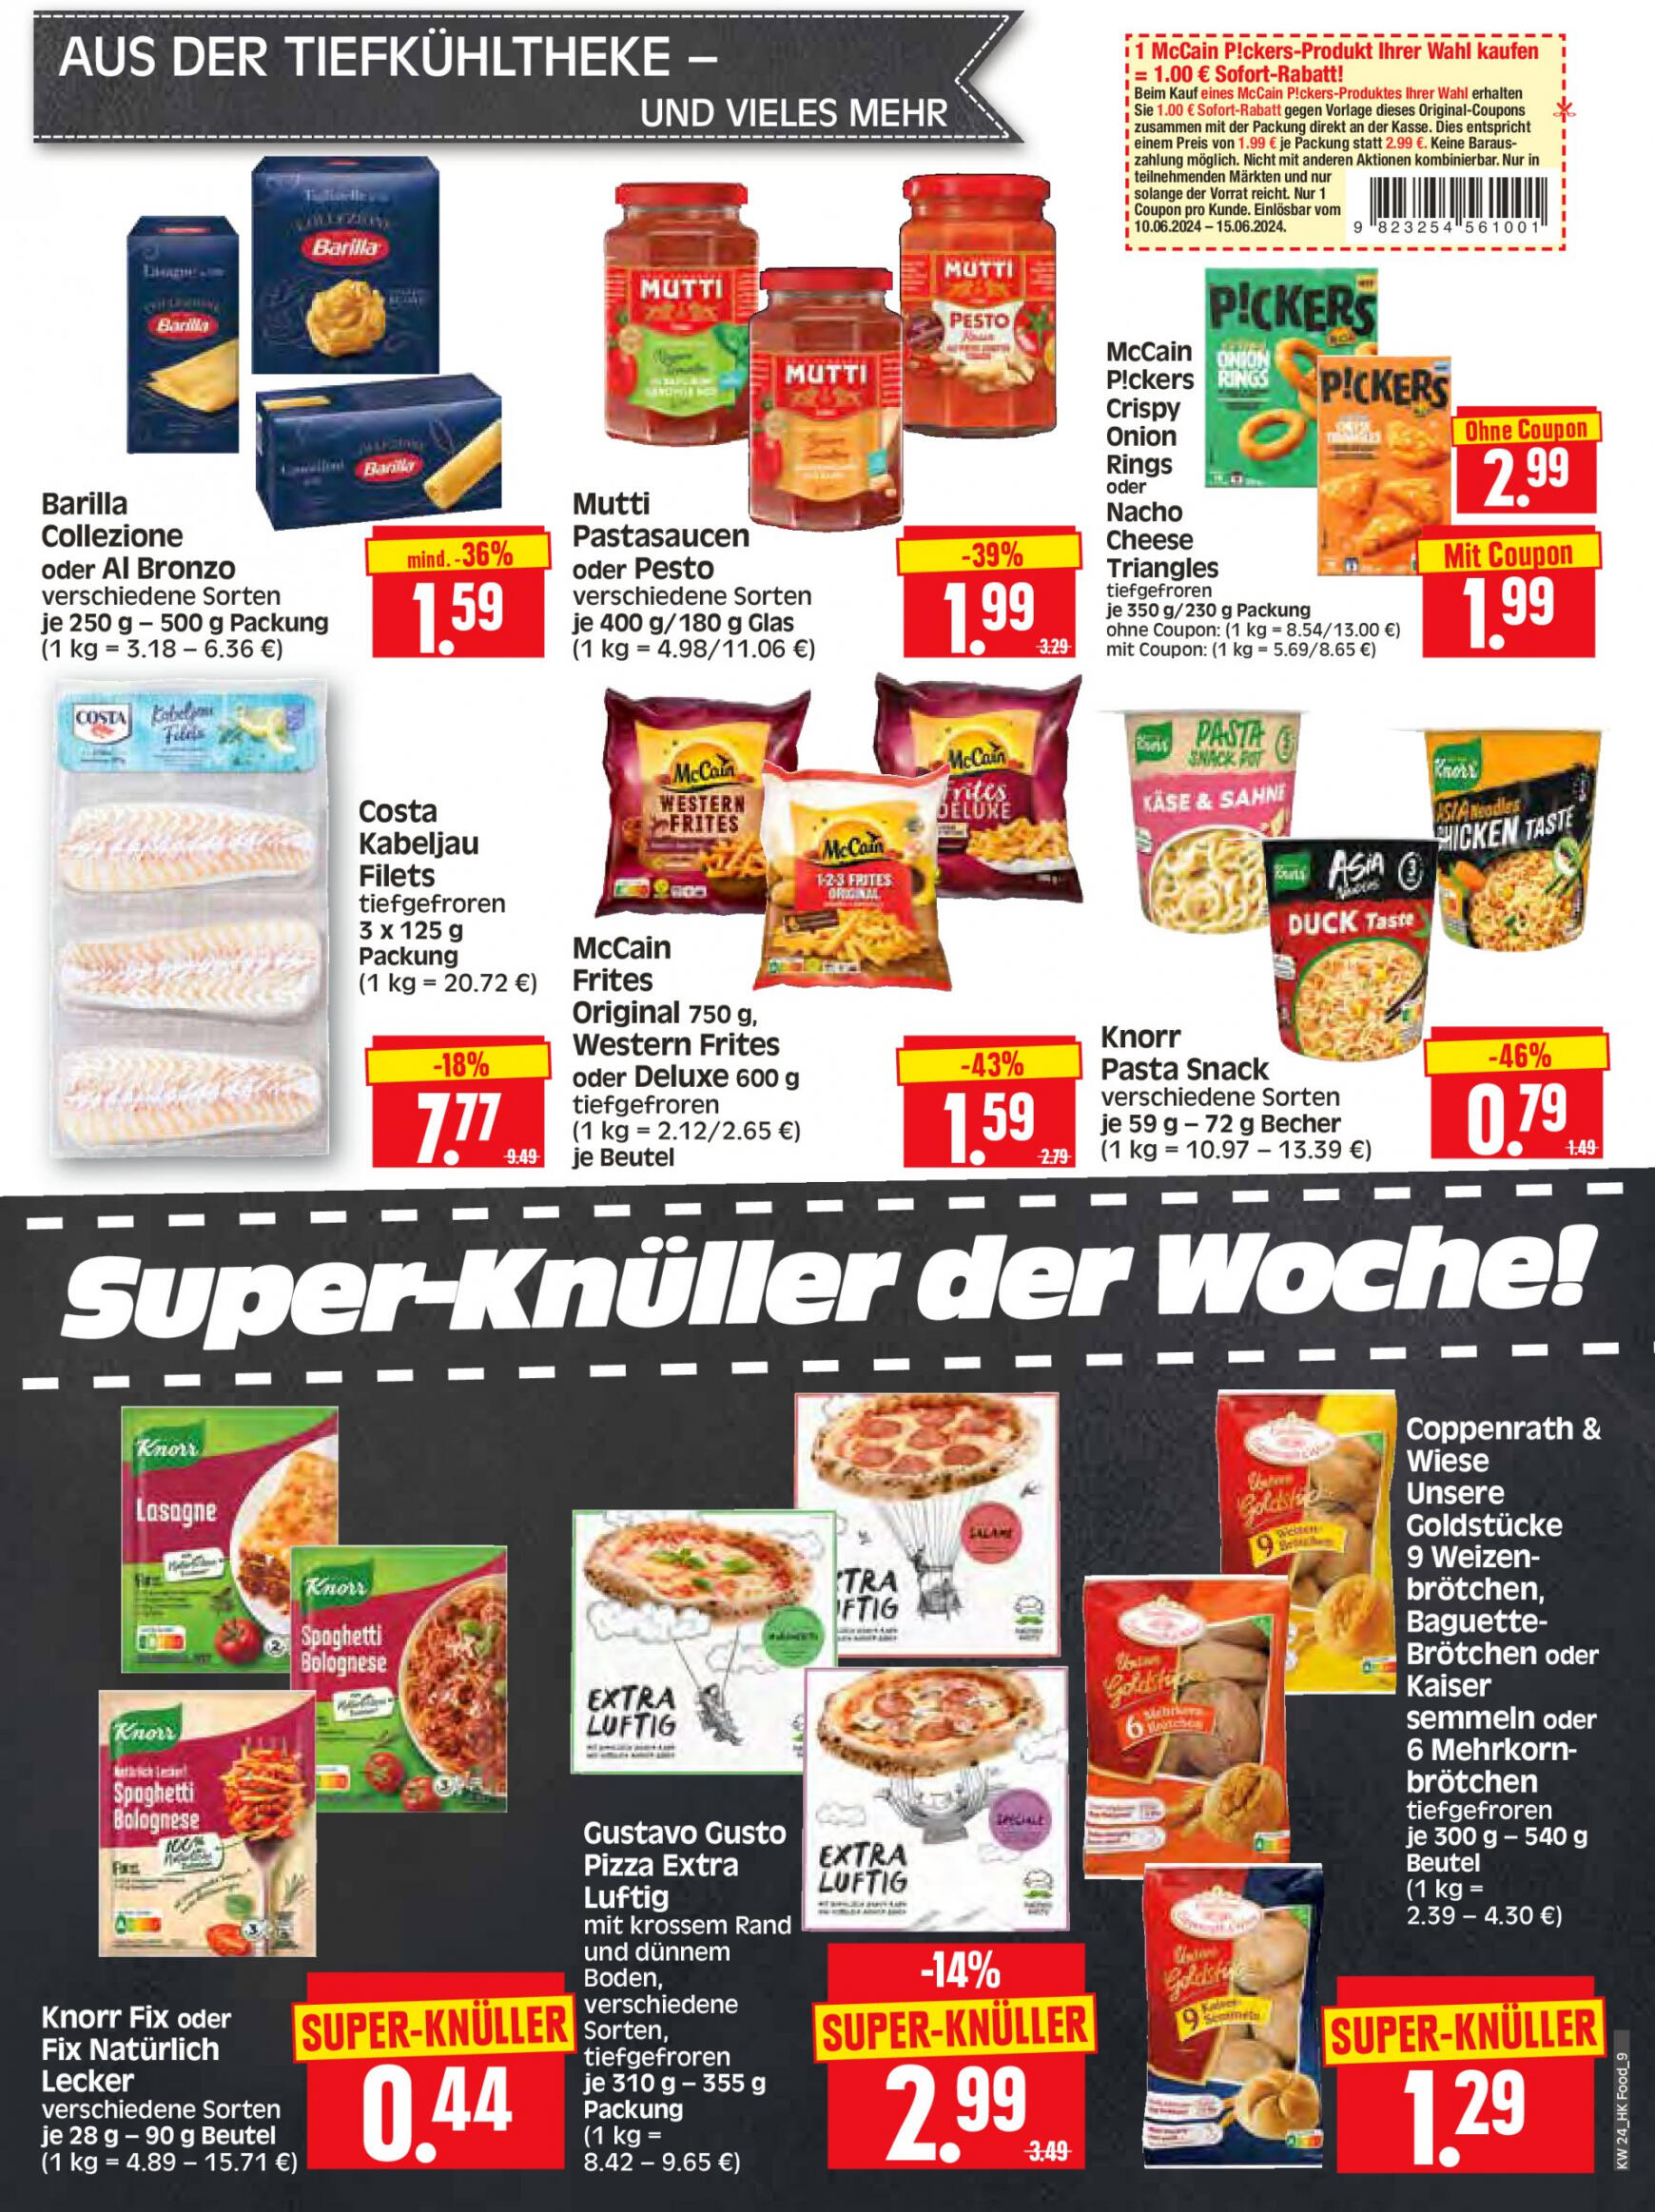 herkules - Flyer Herkules - Lebensmittel aktuell 10.06. - 15.06. - page: 9